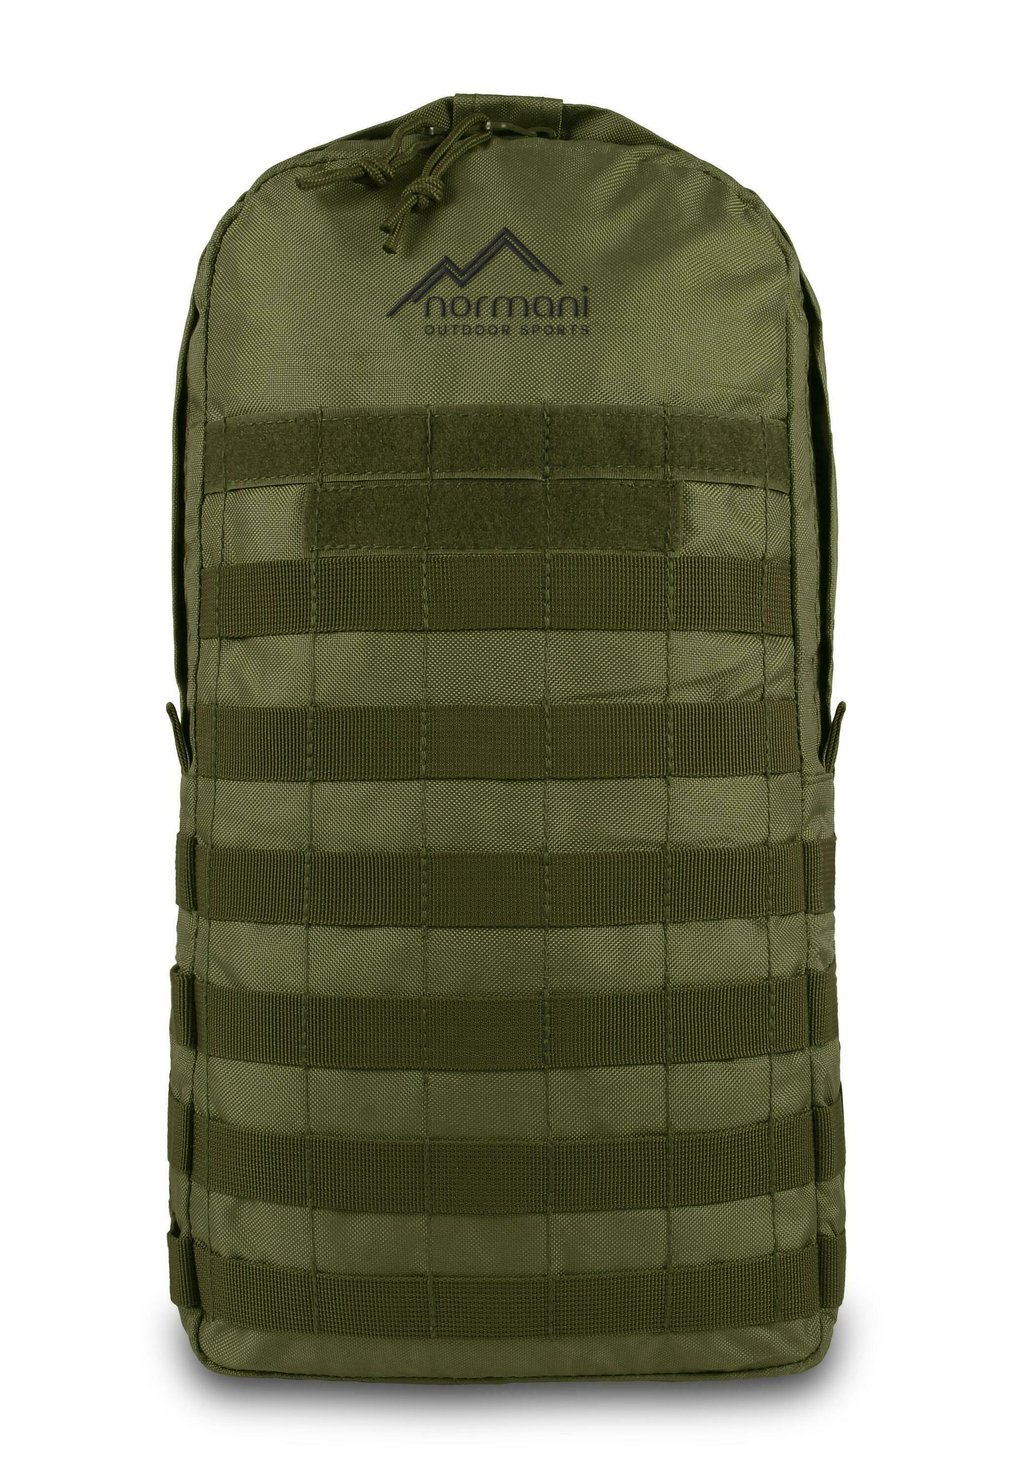 Треккинговый рюкзак BARRACUDA 8L DAYPACK normani Outdoor Sports, цвет oliv